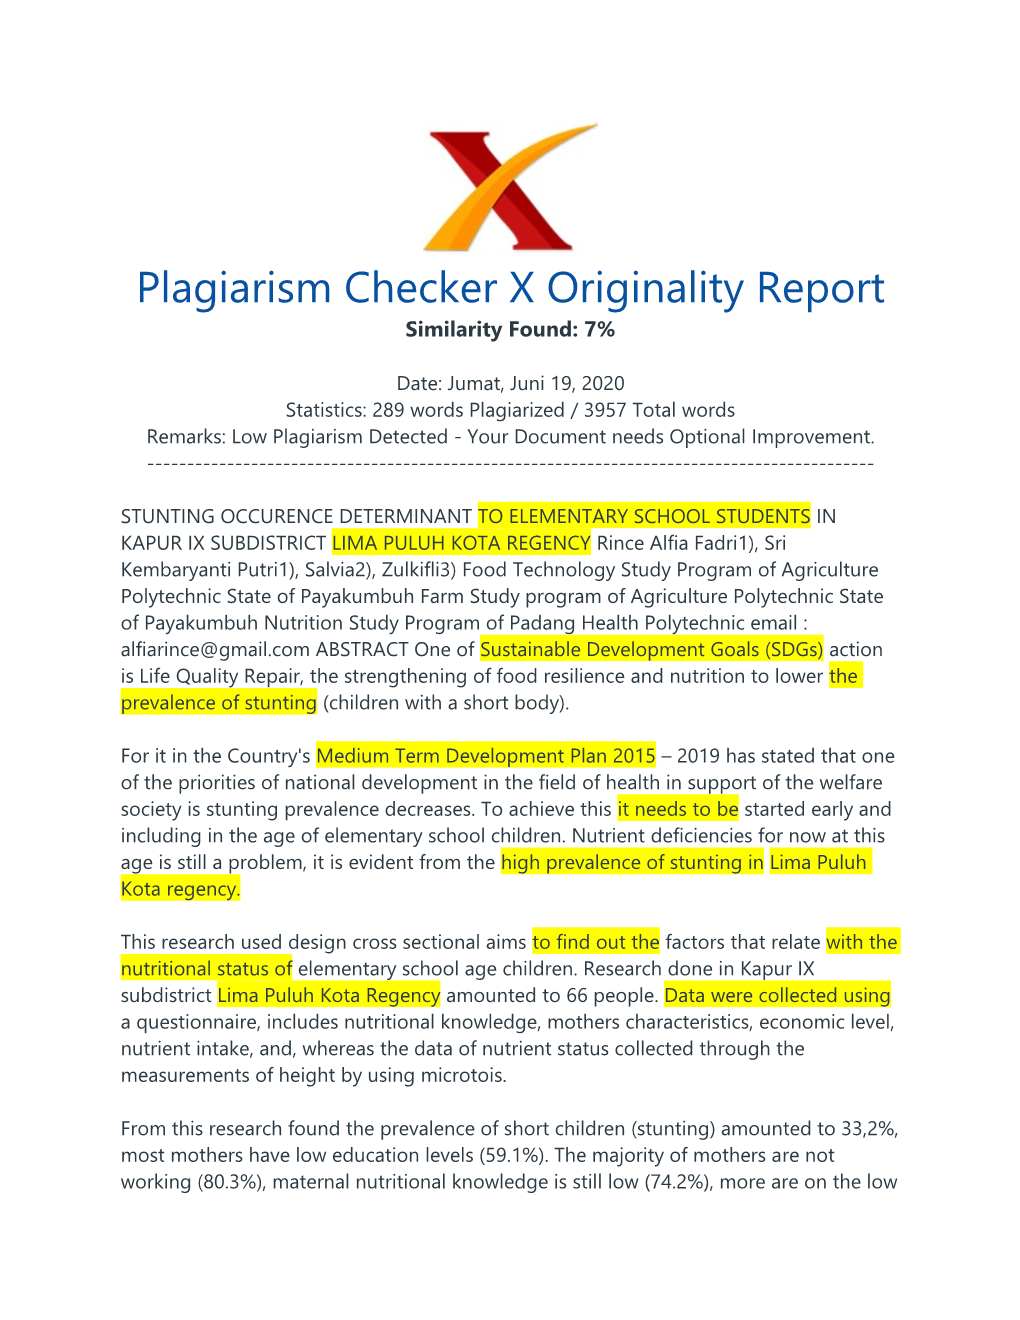 Plagiarism Checker X Originality Report Similarity Found: 7%